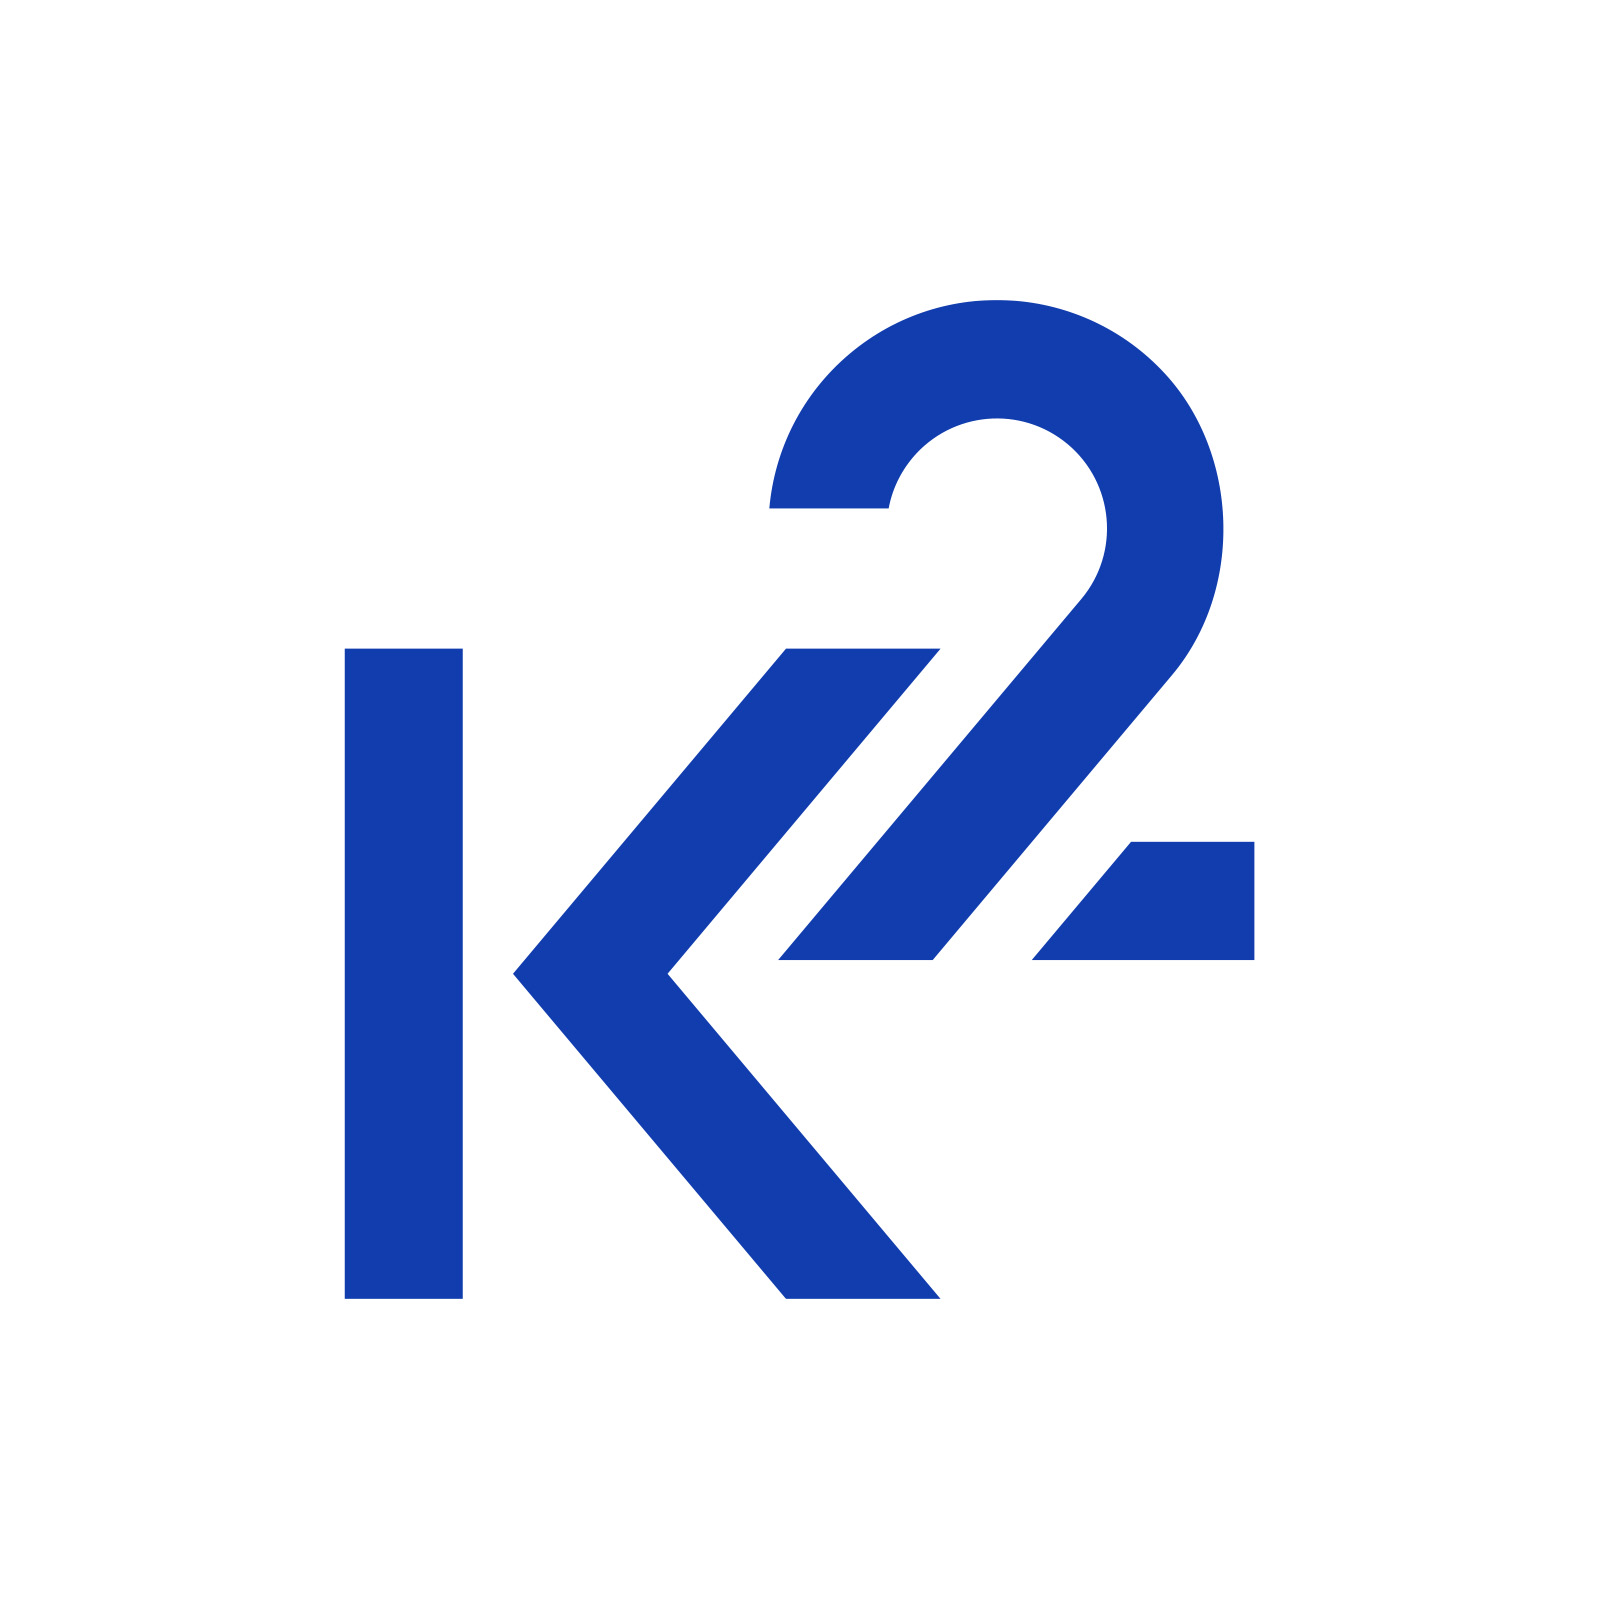 K2 logo design by logo designer Stanislav+Regis for your inspiration and for the worlds largest logo competition